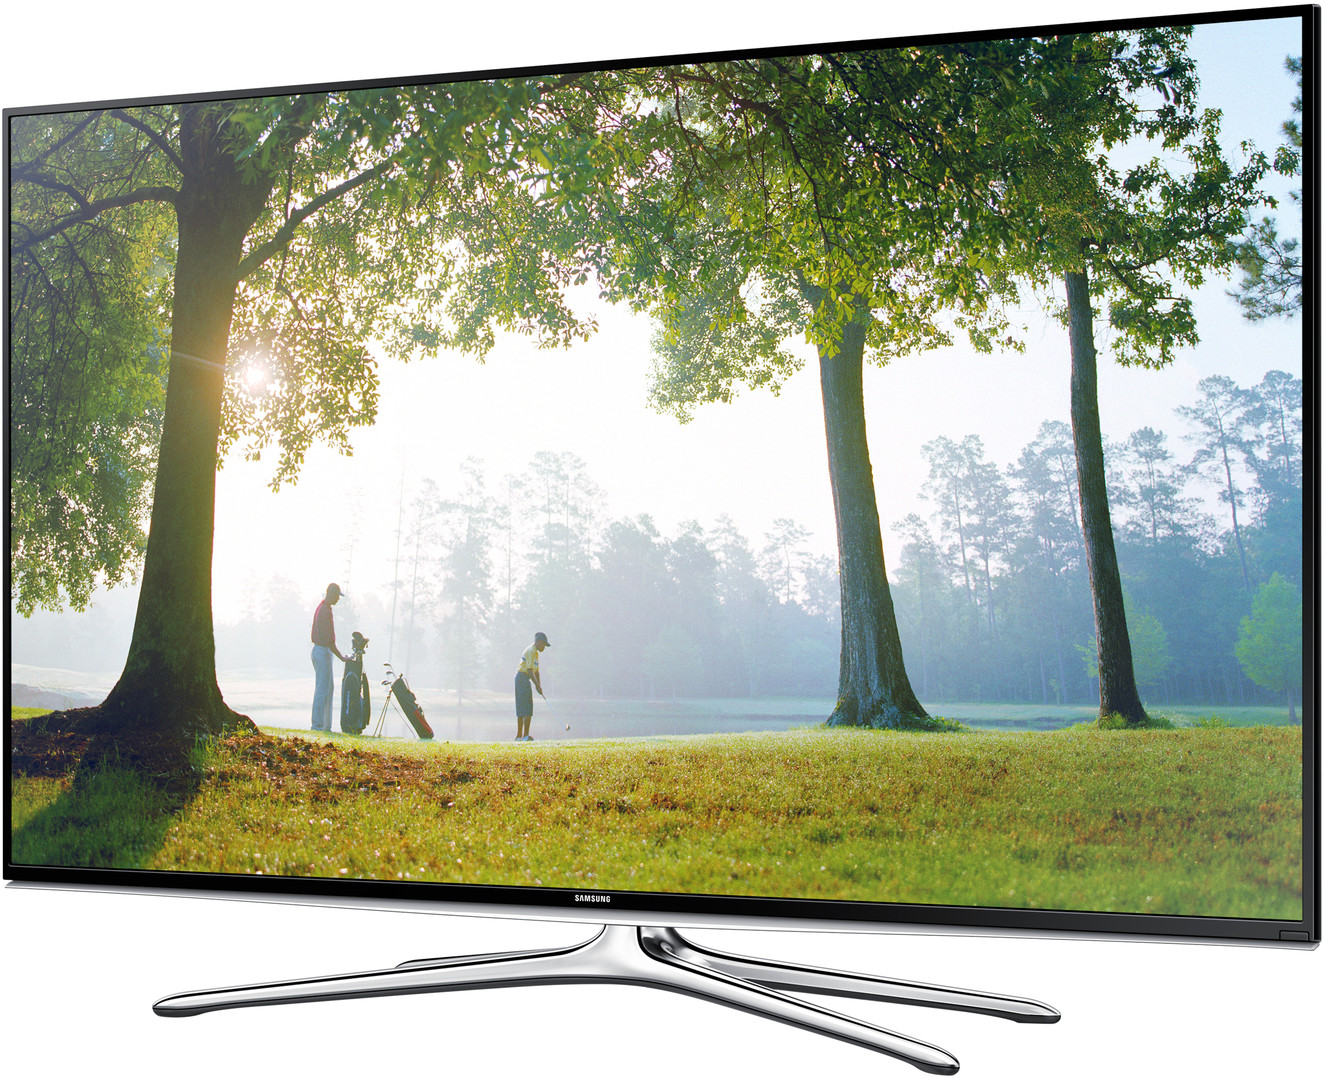 Samsung UE48H6200. TV 48 3D de 100 Hz reales barato (519 €)